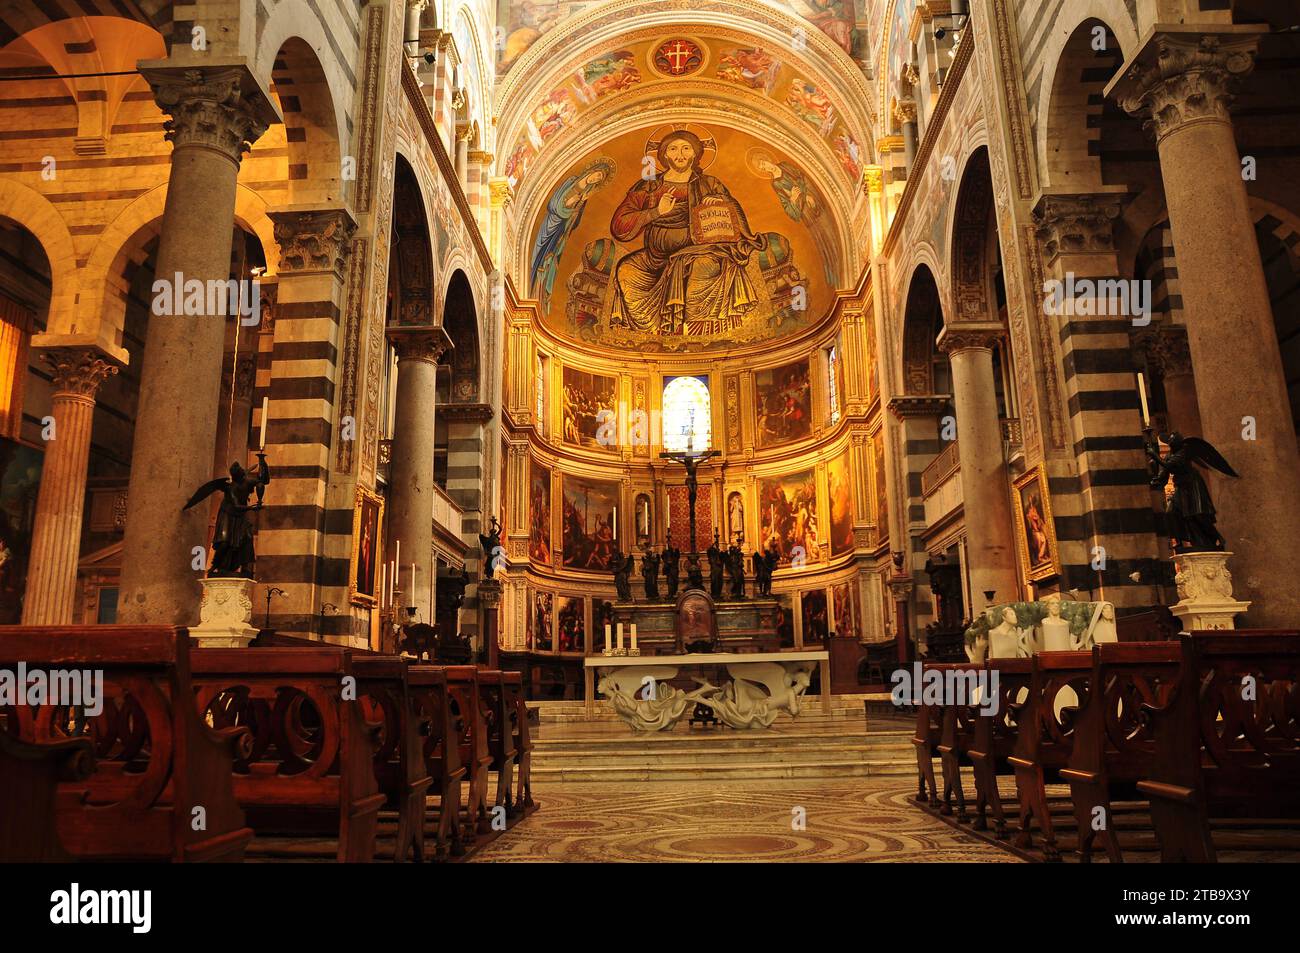 Inside the Duomo in Pisa Italy. Stock Photo